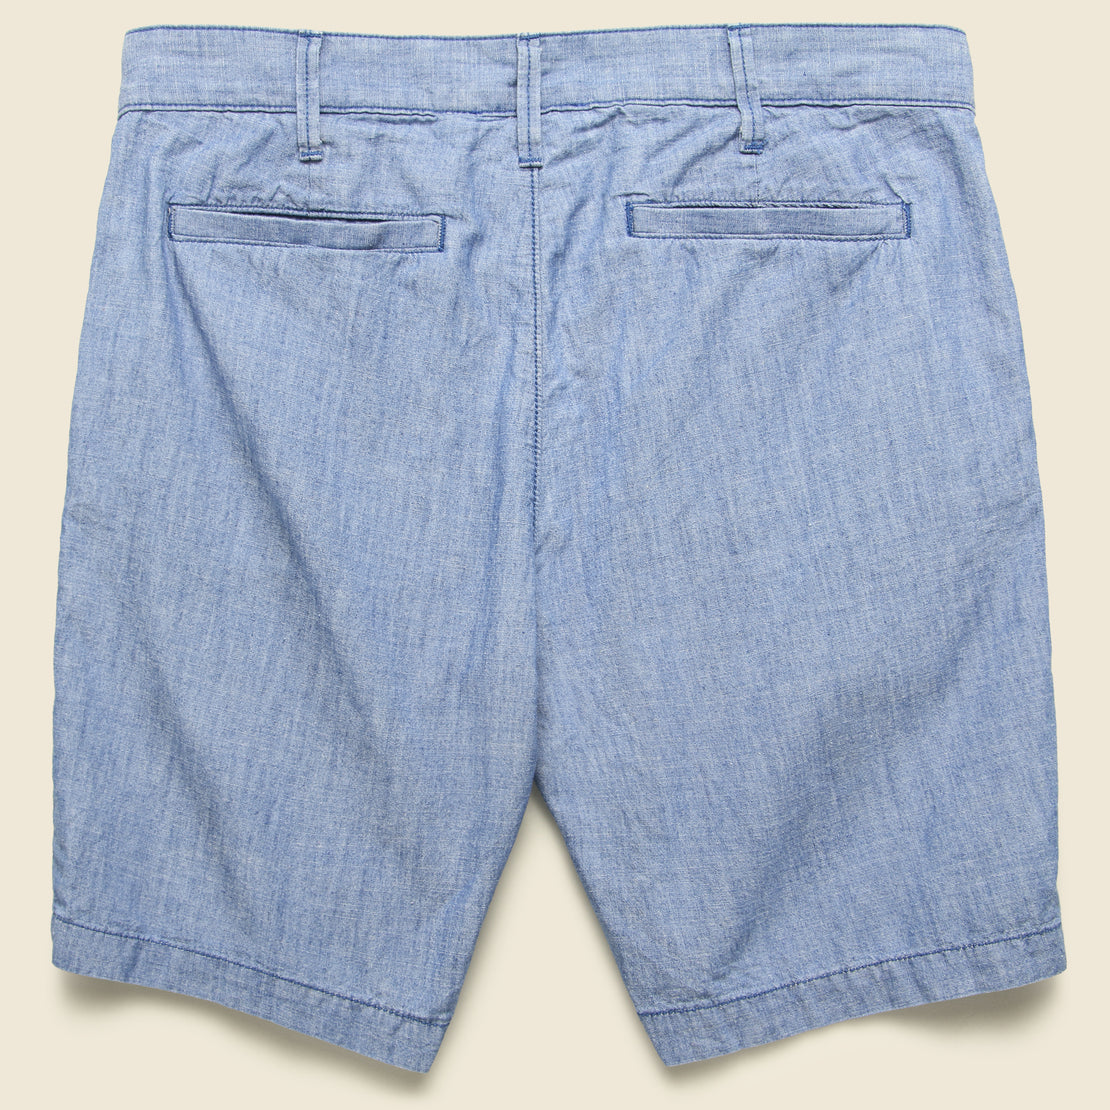 Chambray Bermuda Short - Indigo - Save Khaki - STAG Provisions - Shorts - Solid